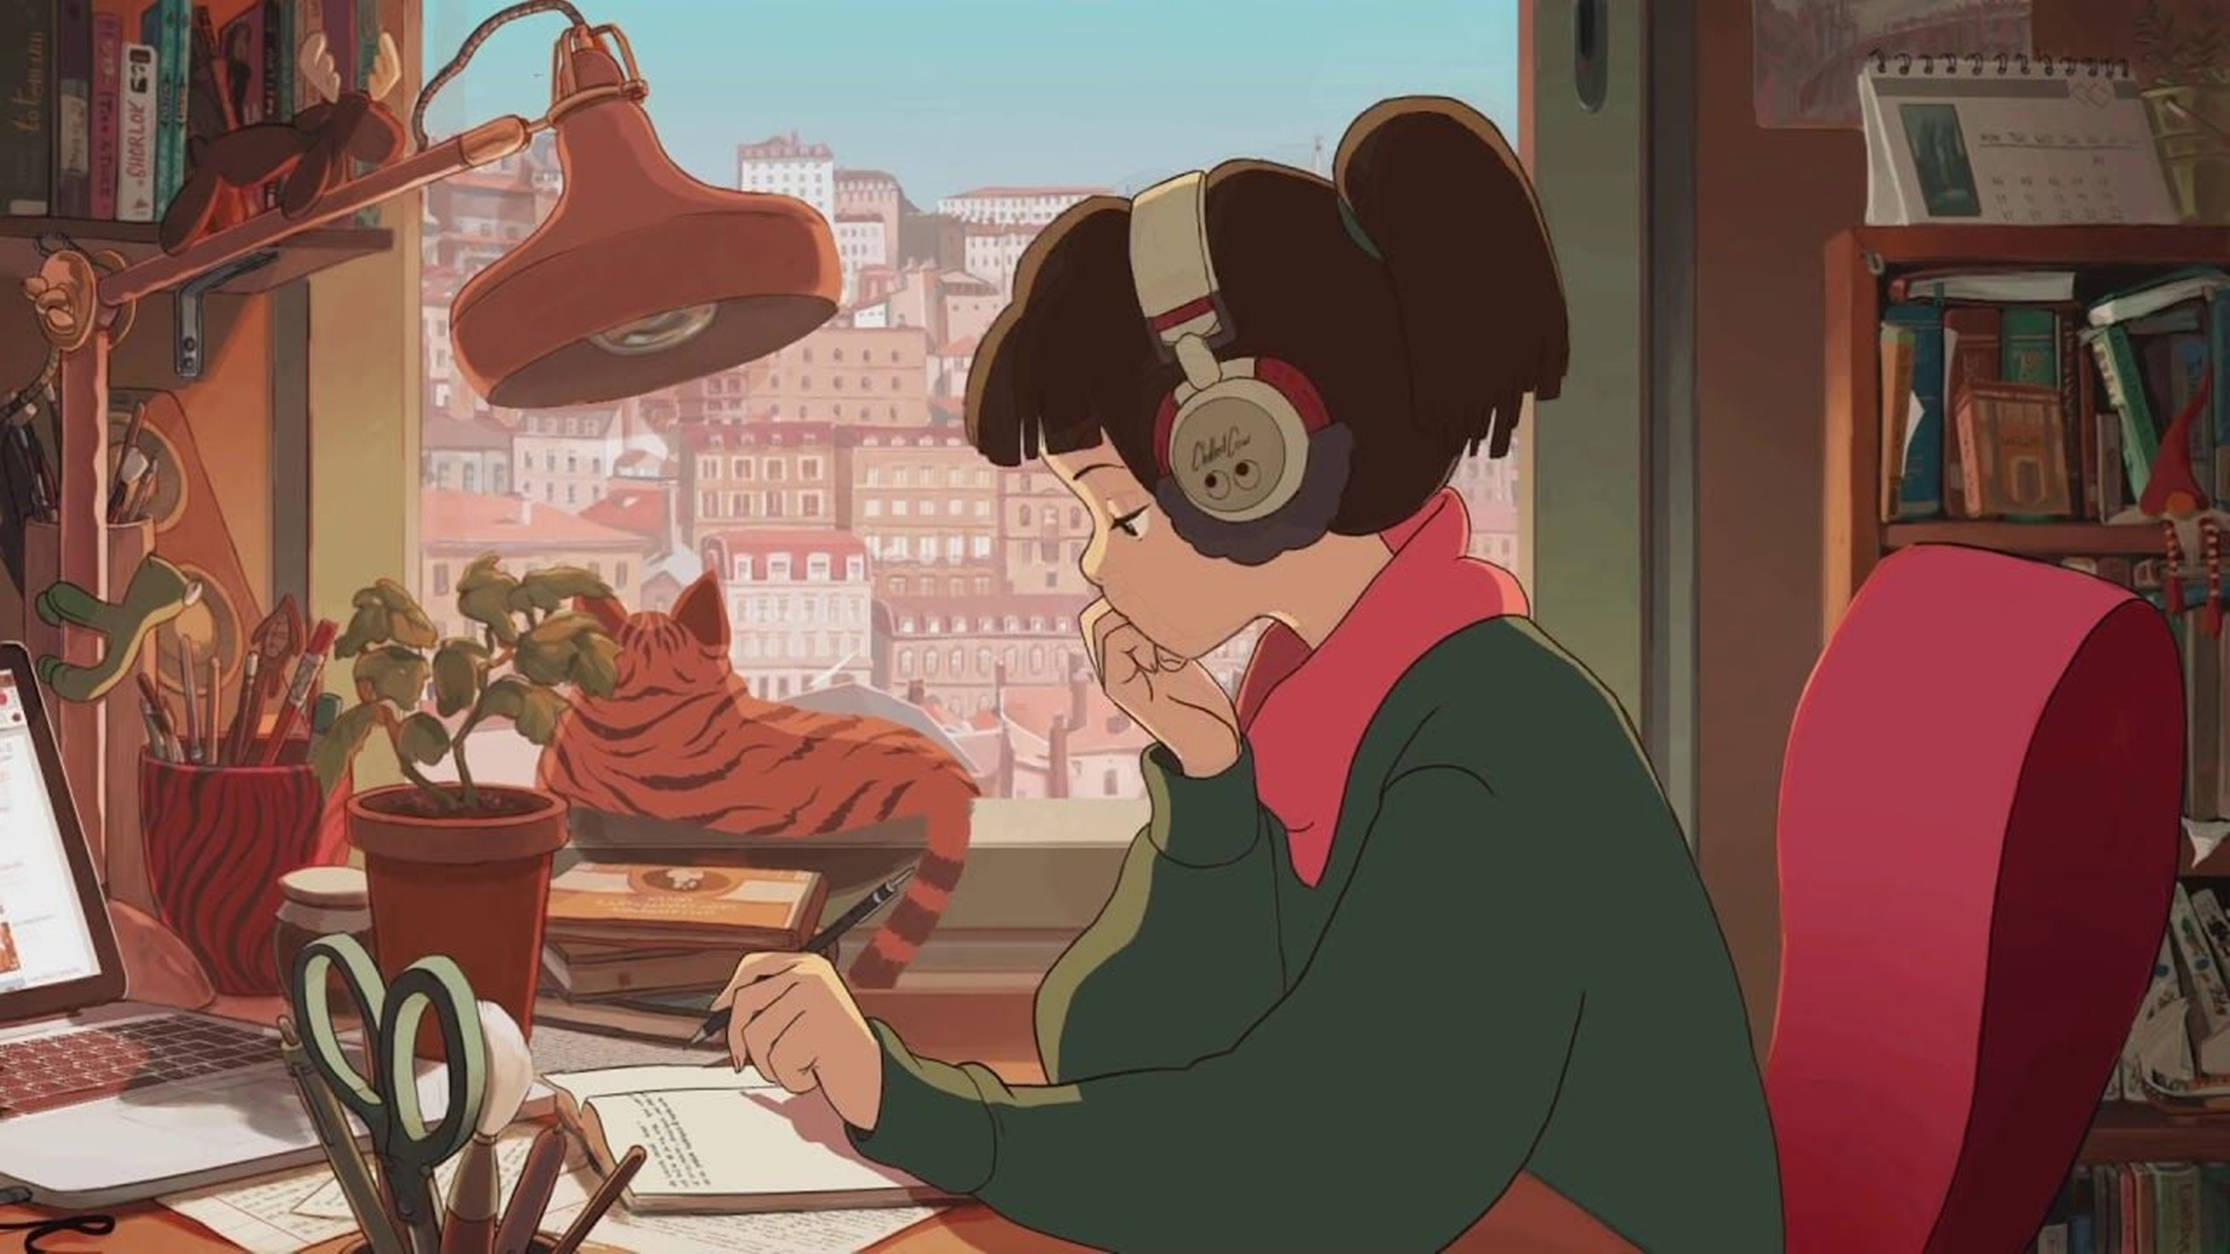 Lo Fi Anime Shizuku Ghibli Character